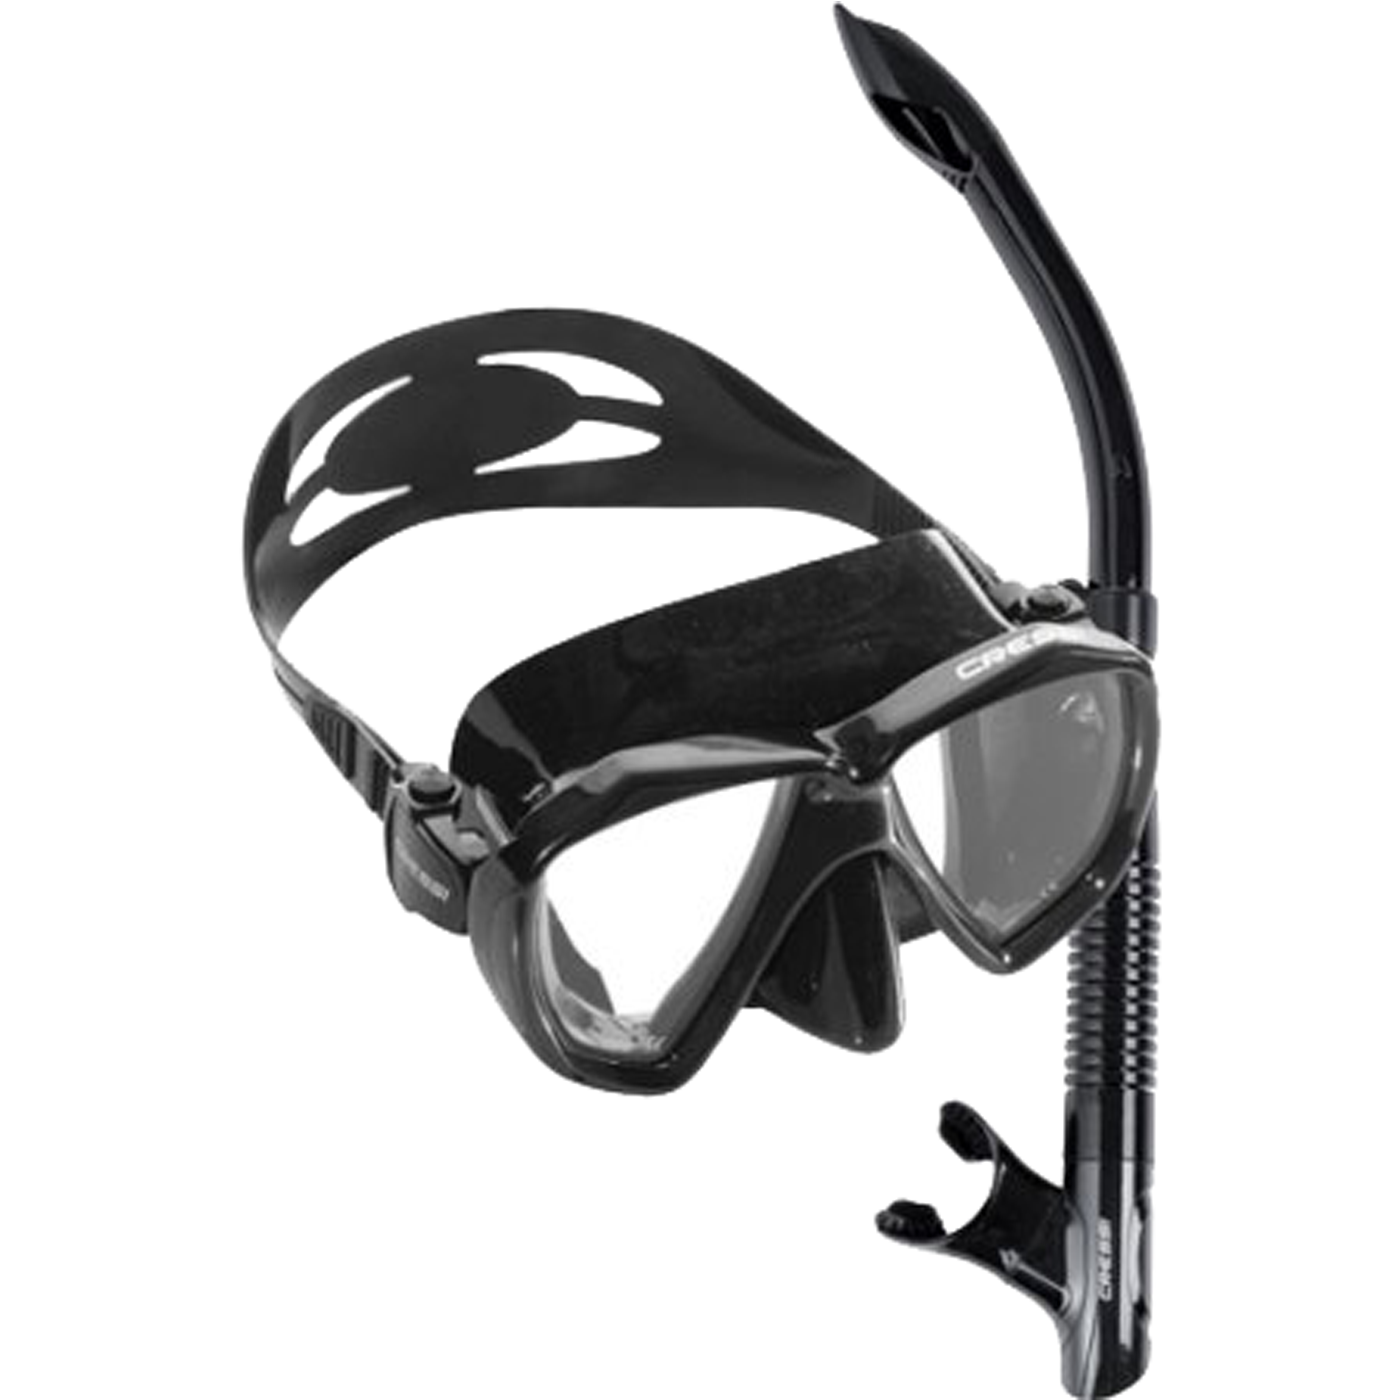 A Black Scuba Mask And Snorkel